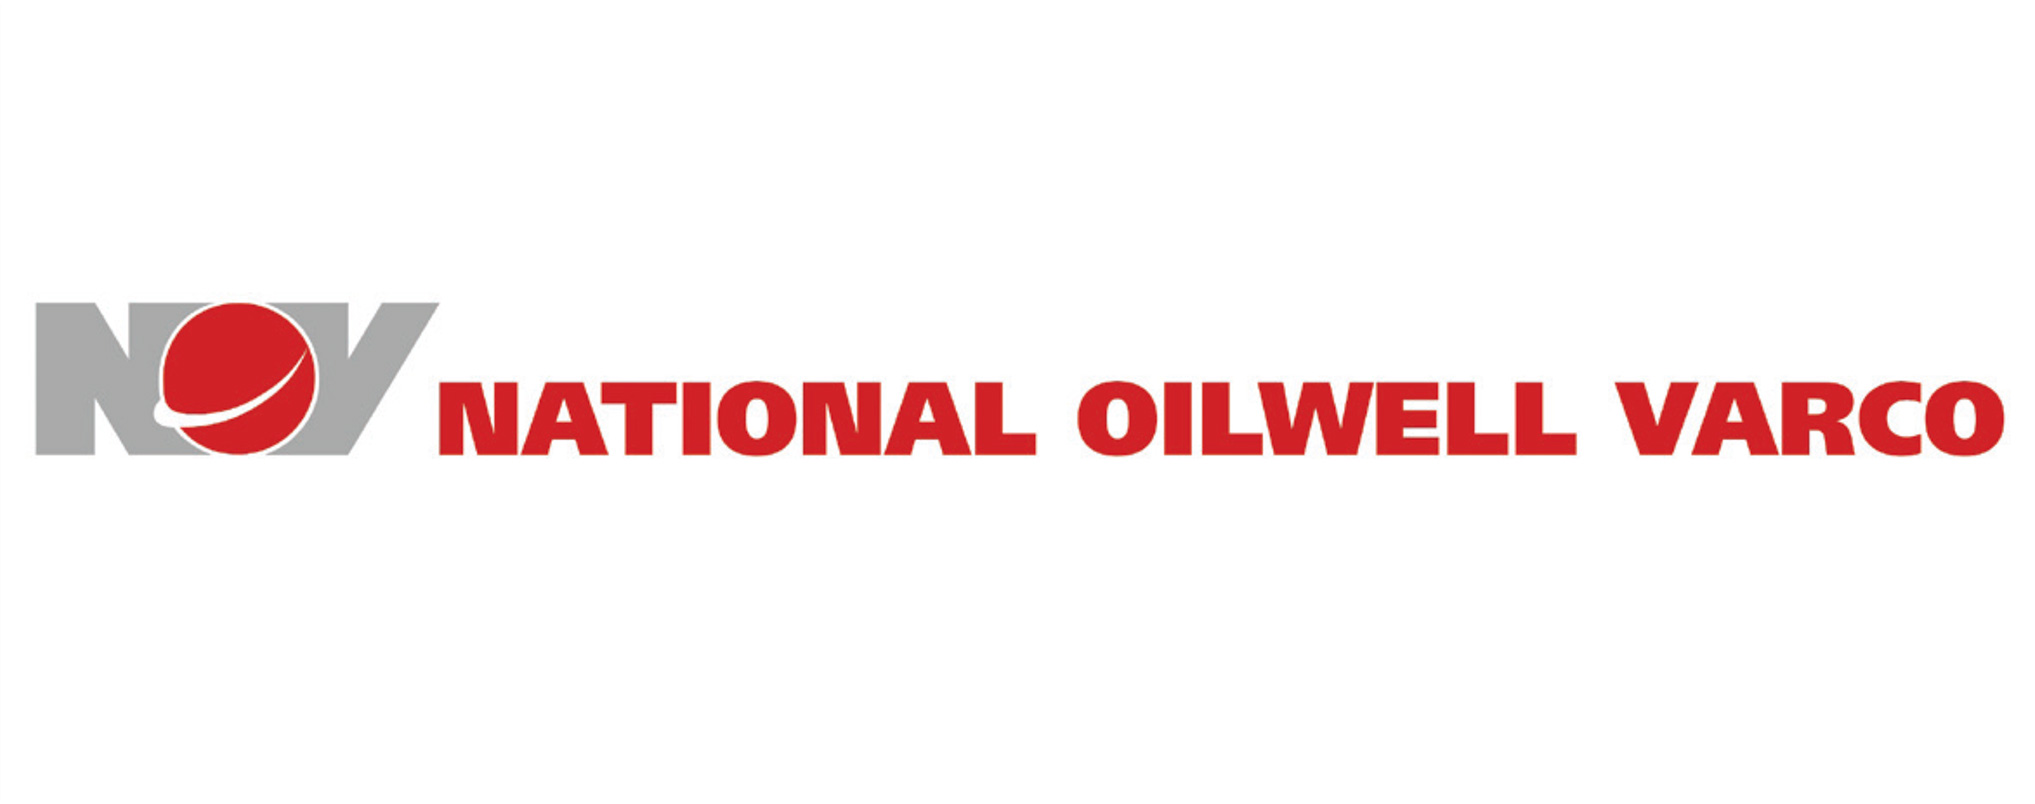 national oilwell varco logo